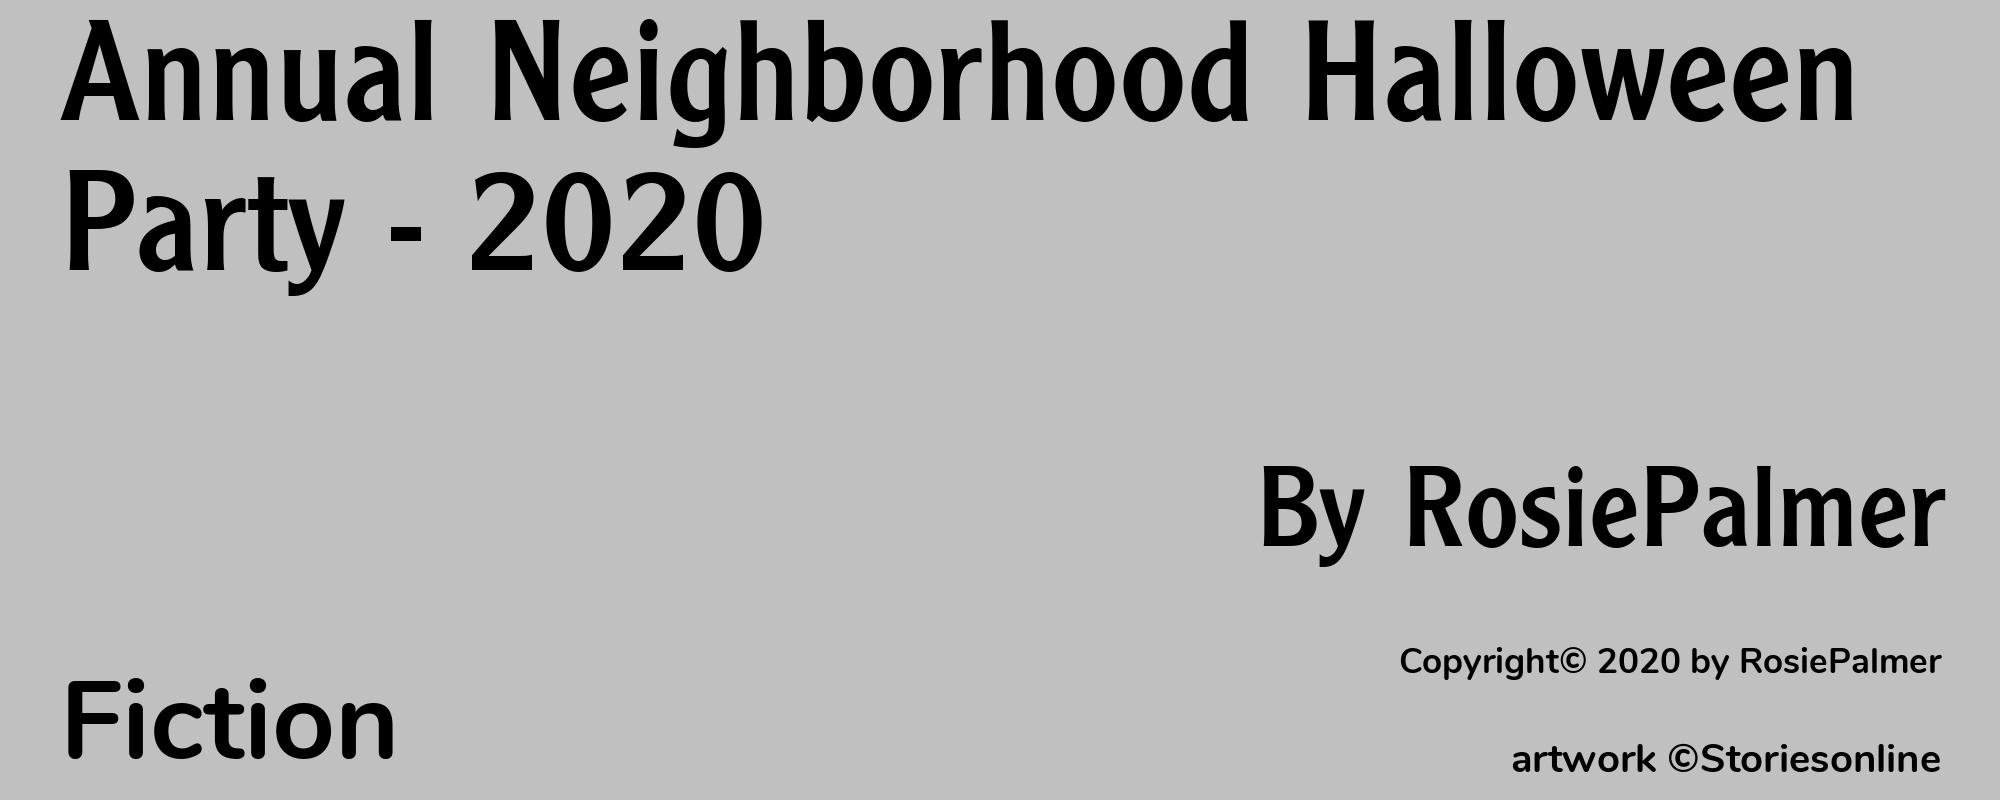 Annual Neighborhood Halloween Party - 2020 - Cover